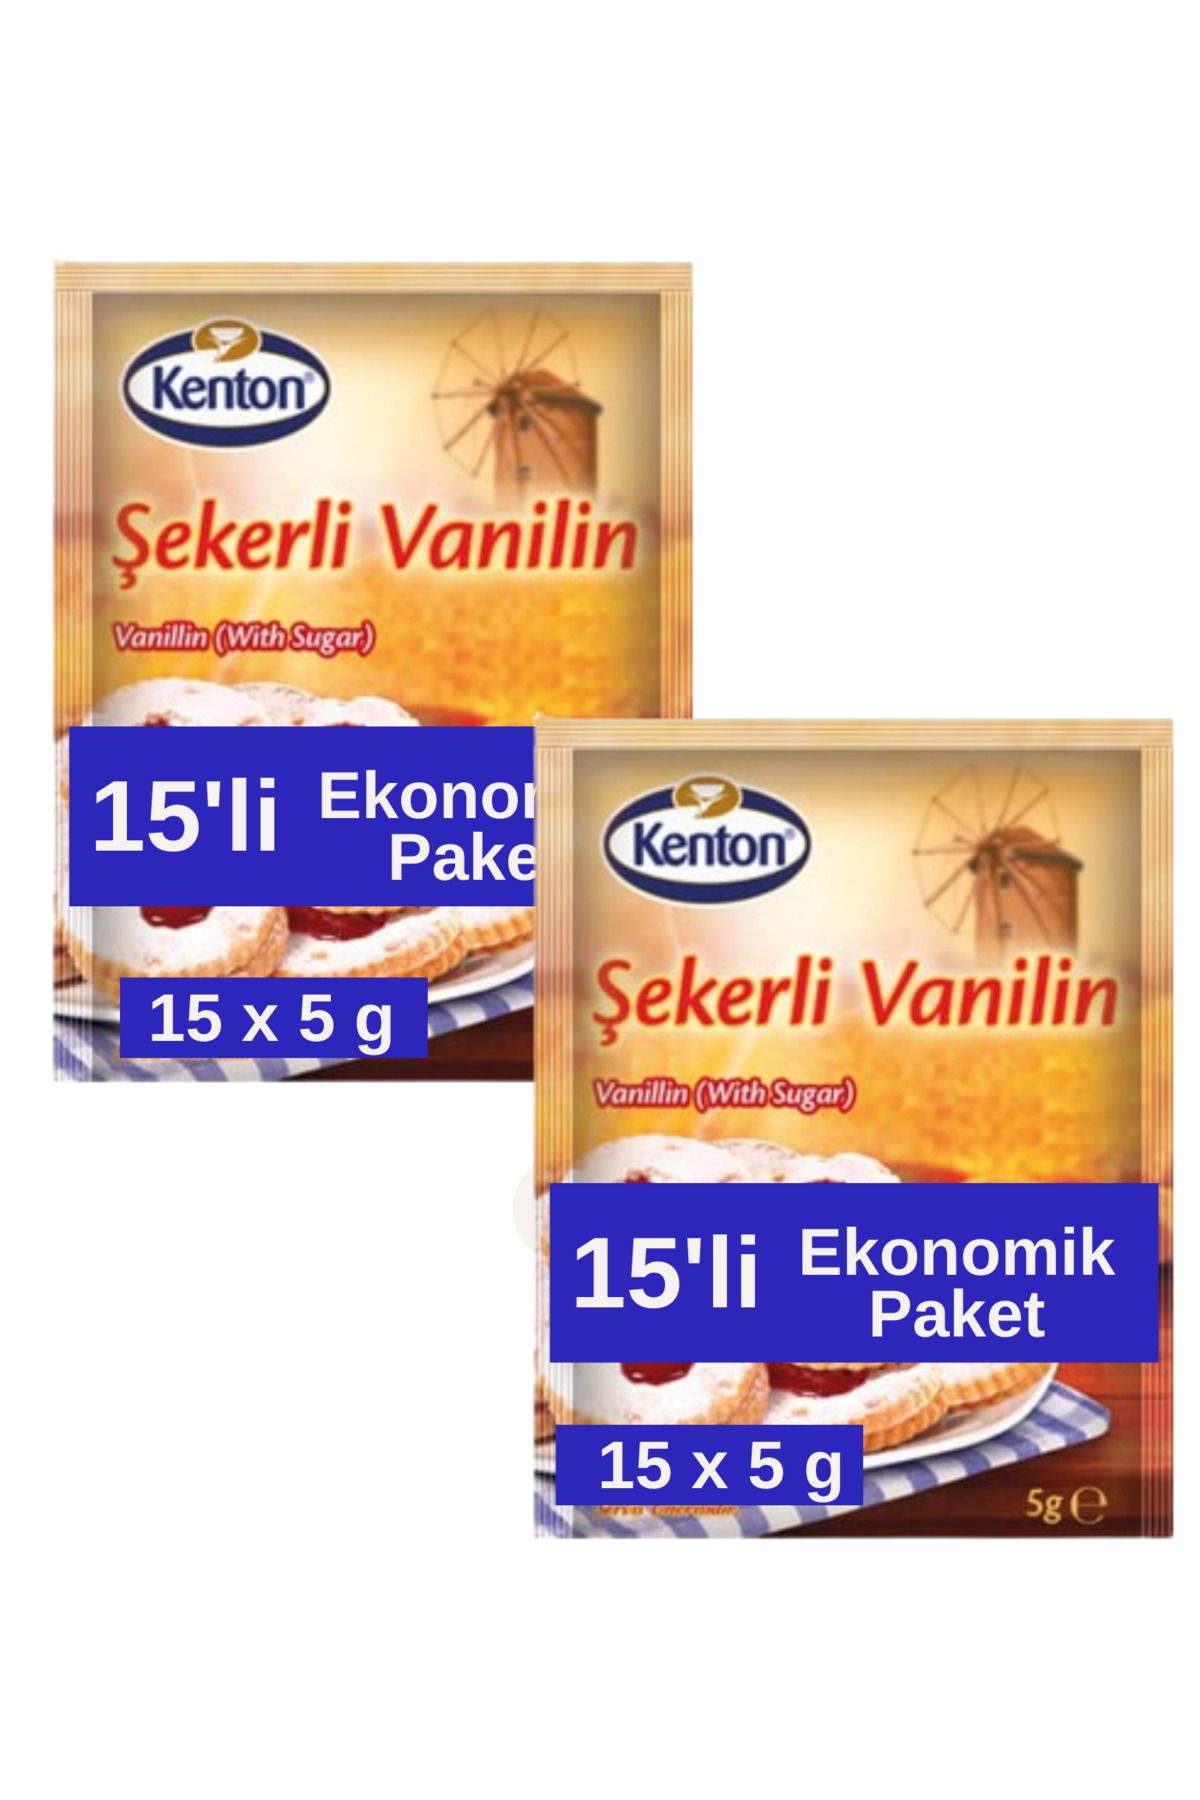 Kenton Şekerli Vanilin (2 adet 15'li Ekonomik Paket) 30 x 5 g